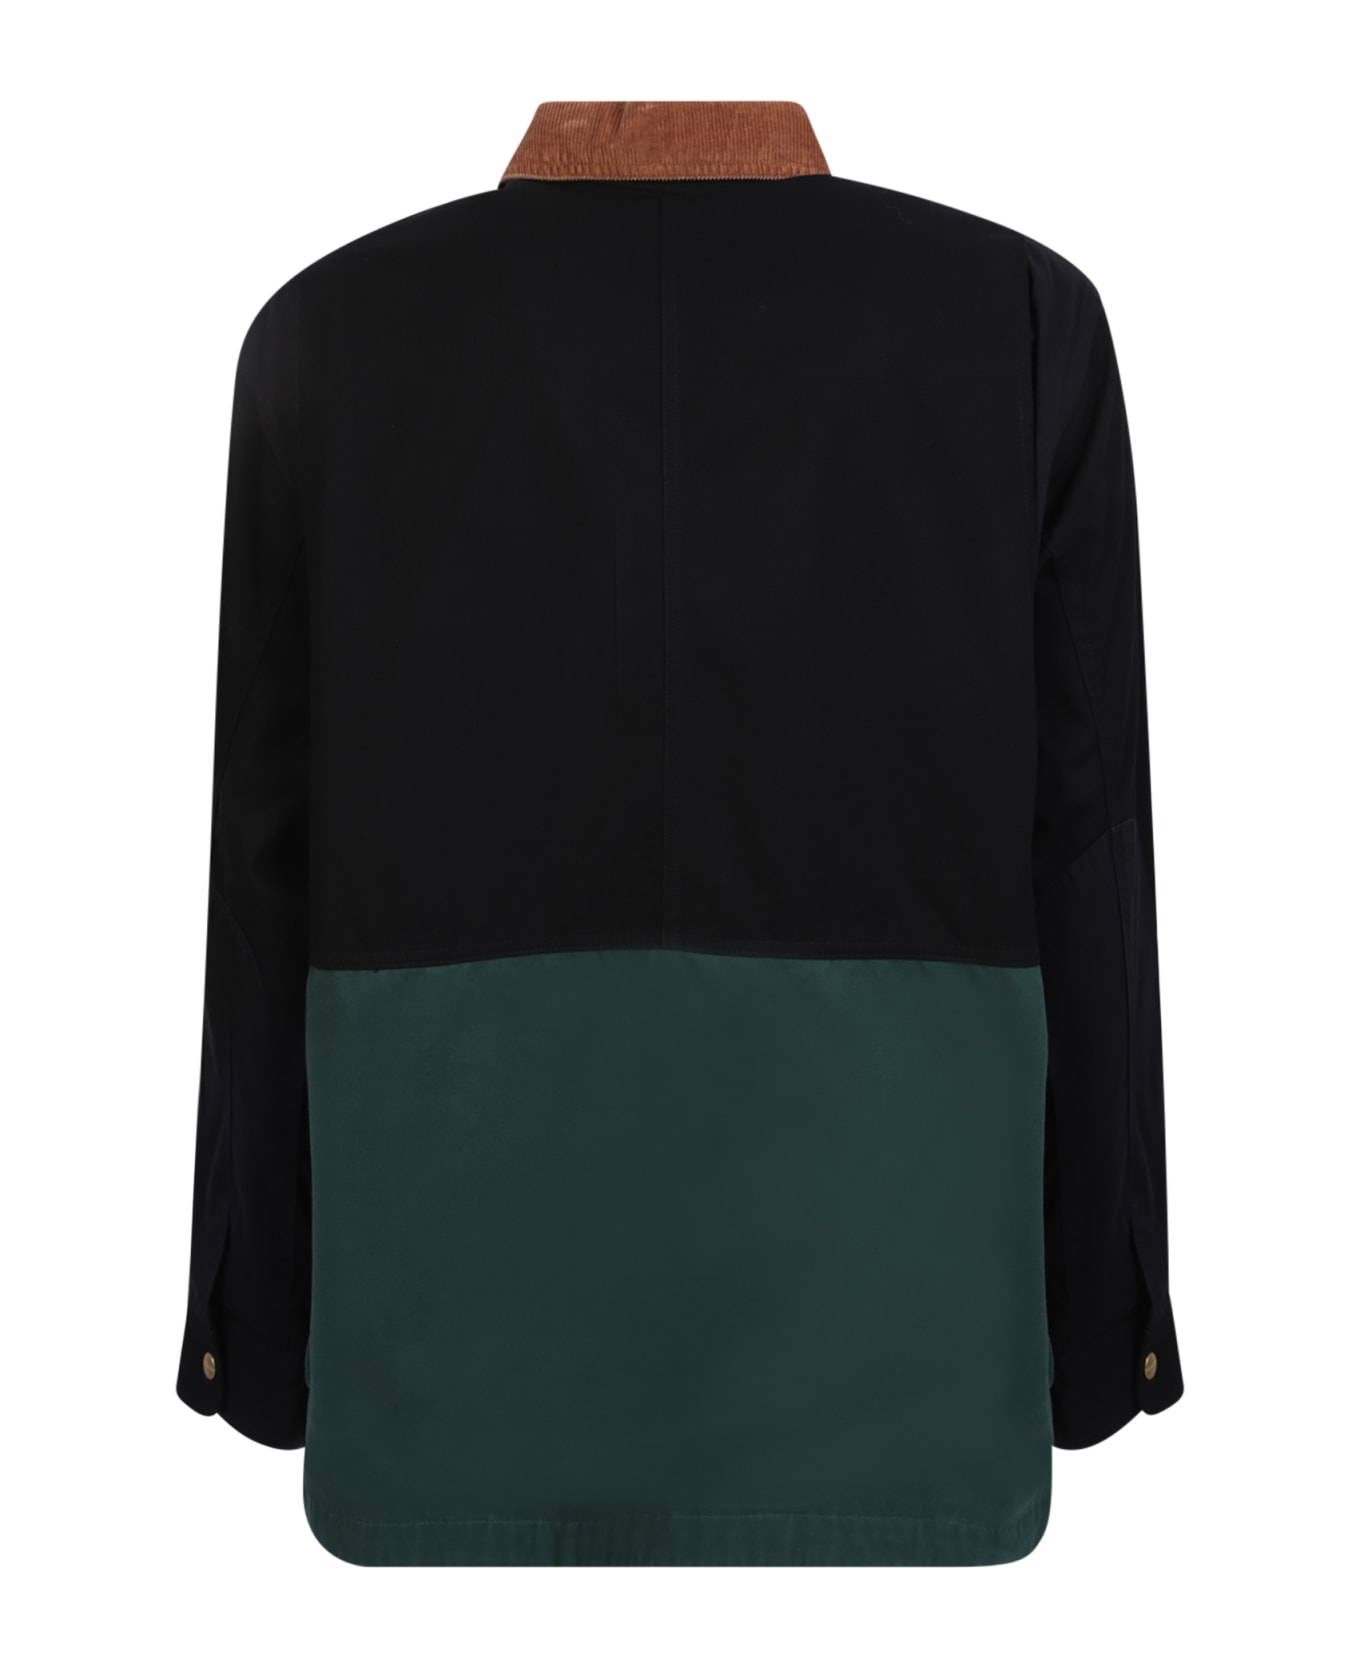 Carhartt Bi-color Heston Jacket - Black